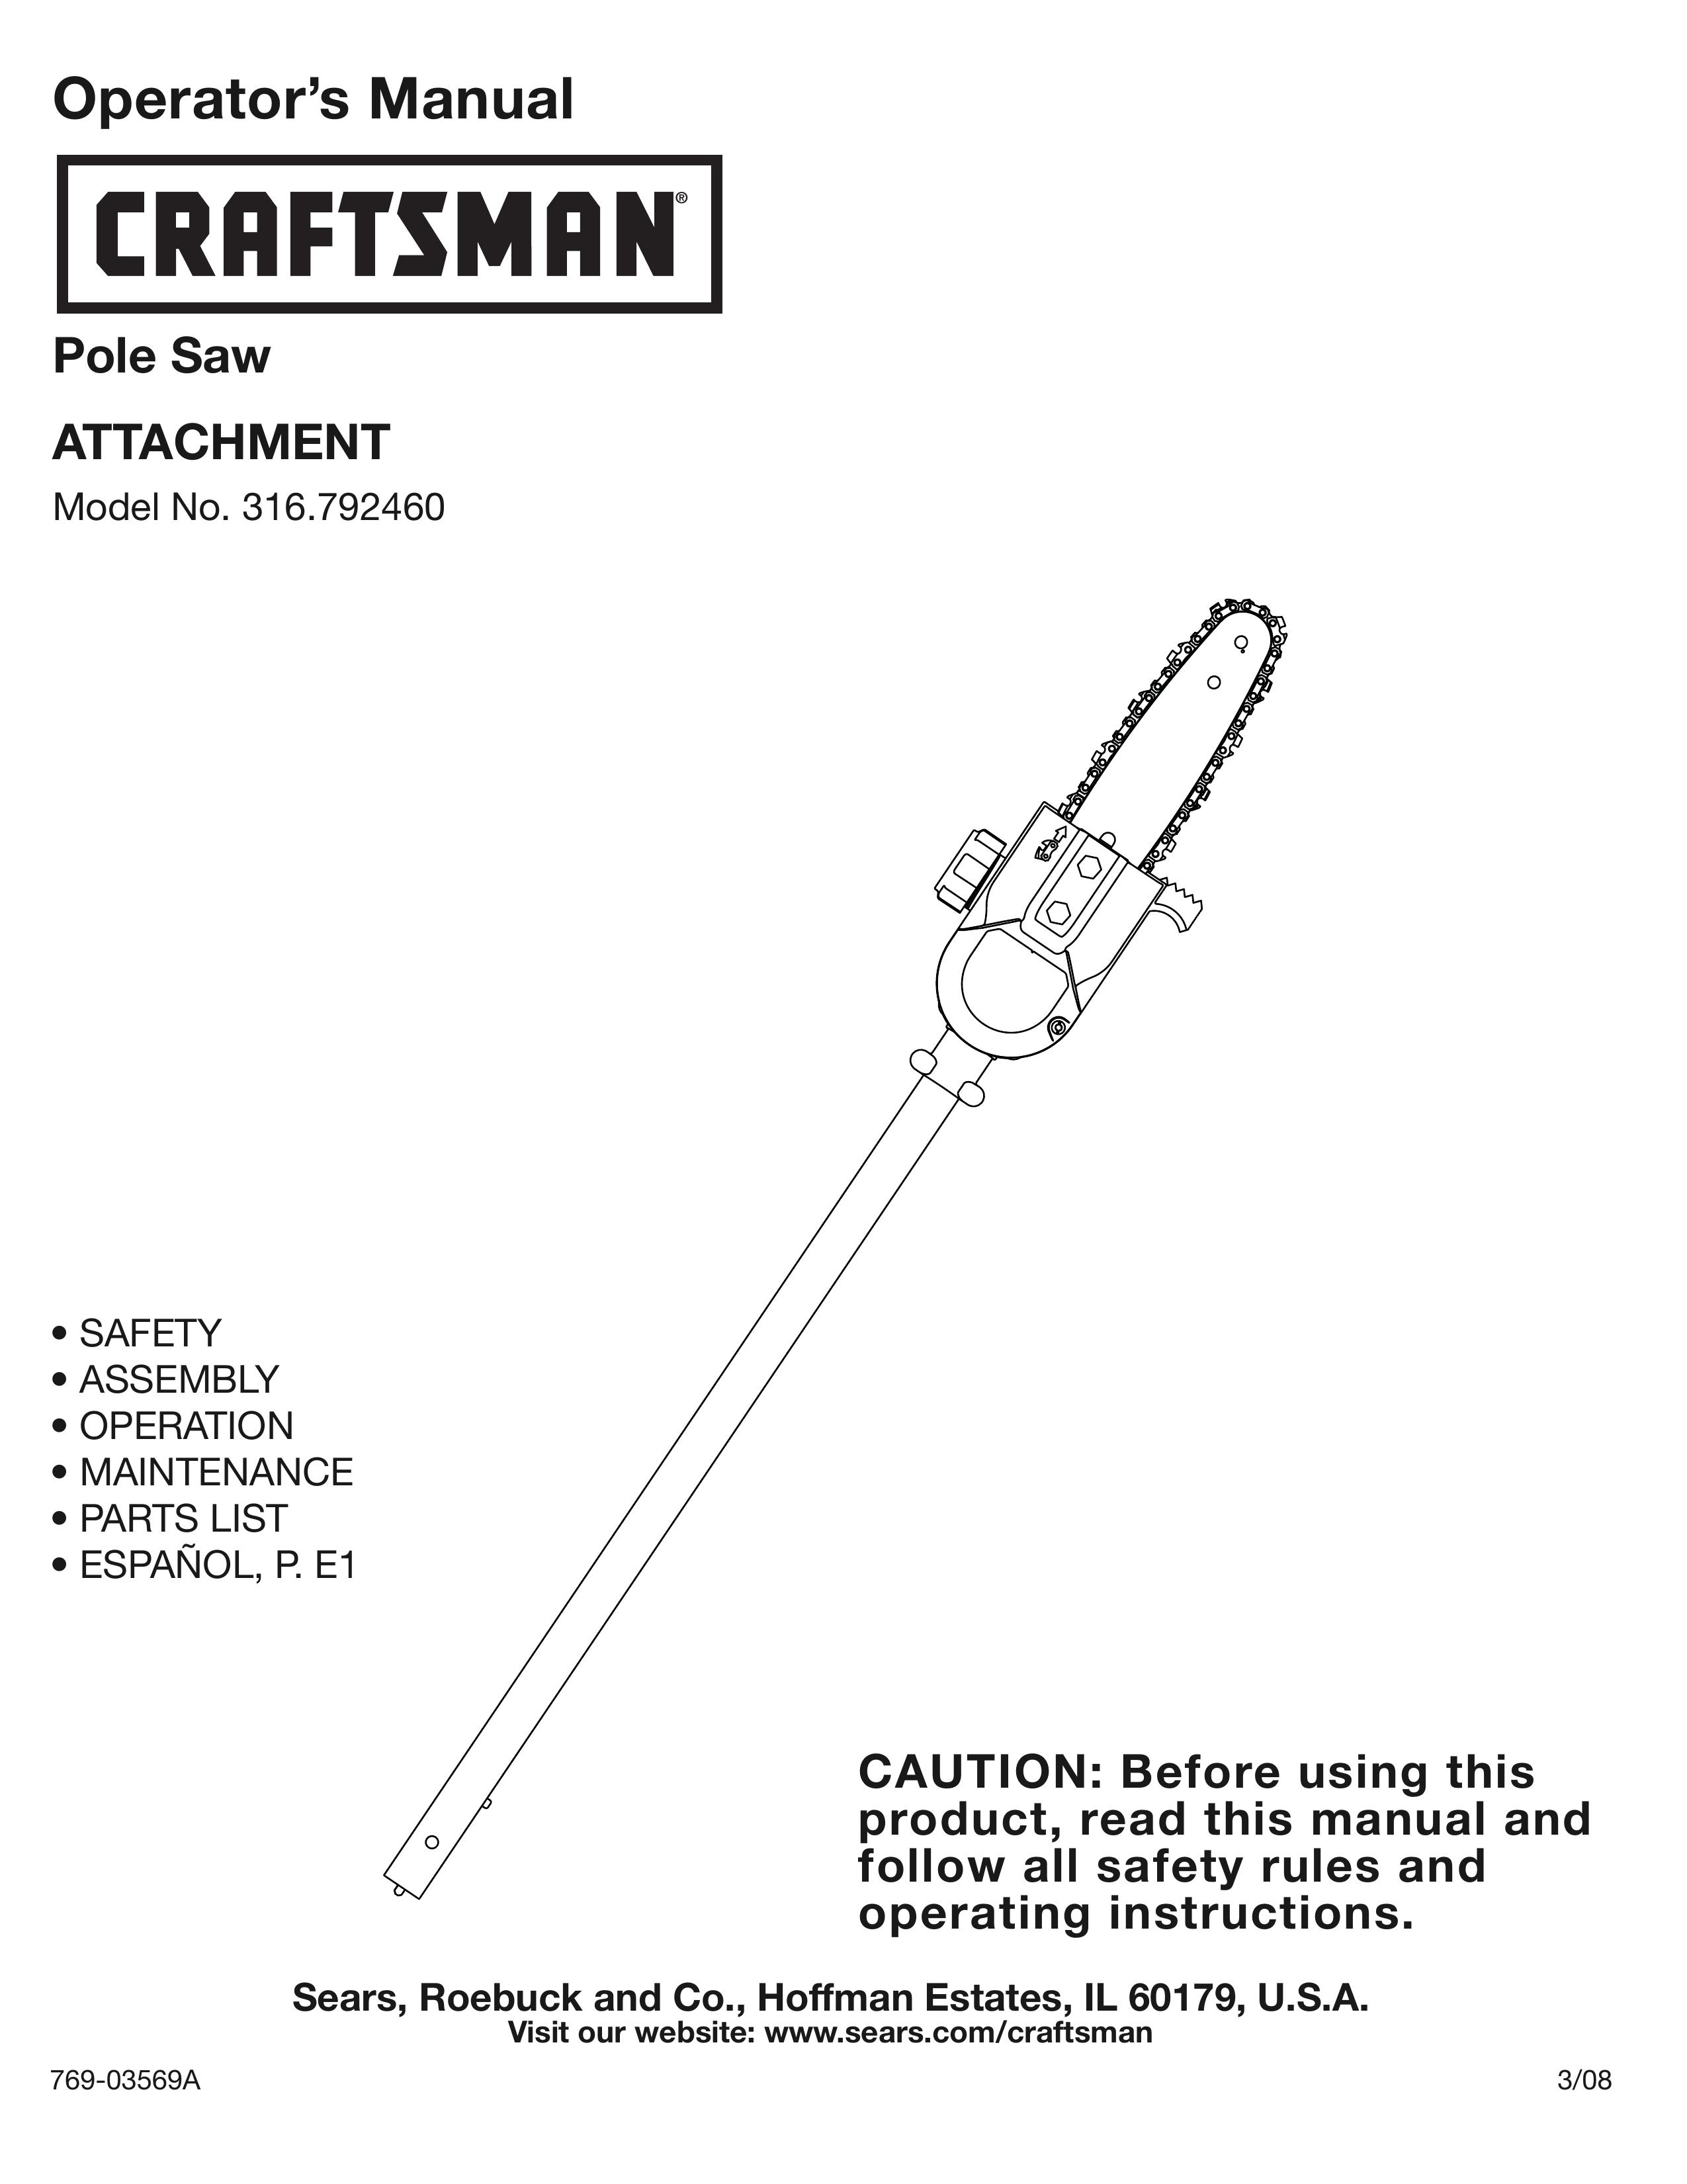 Craftsman 316.79246 Pole Saw User Manual